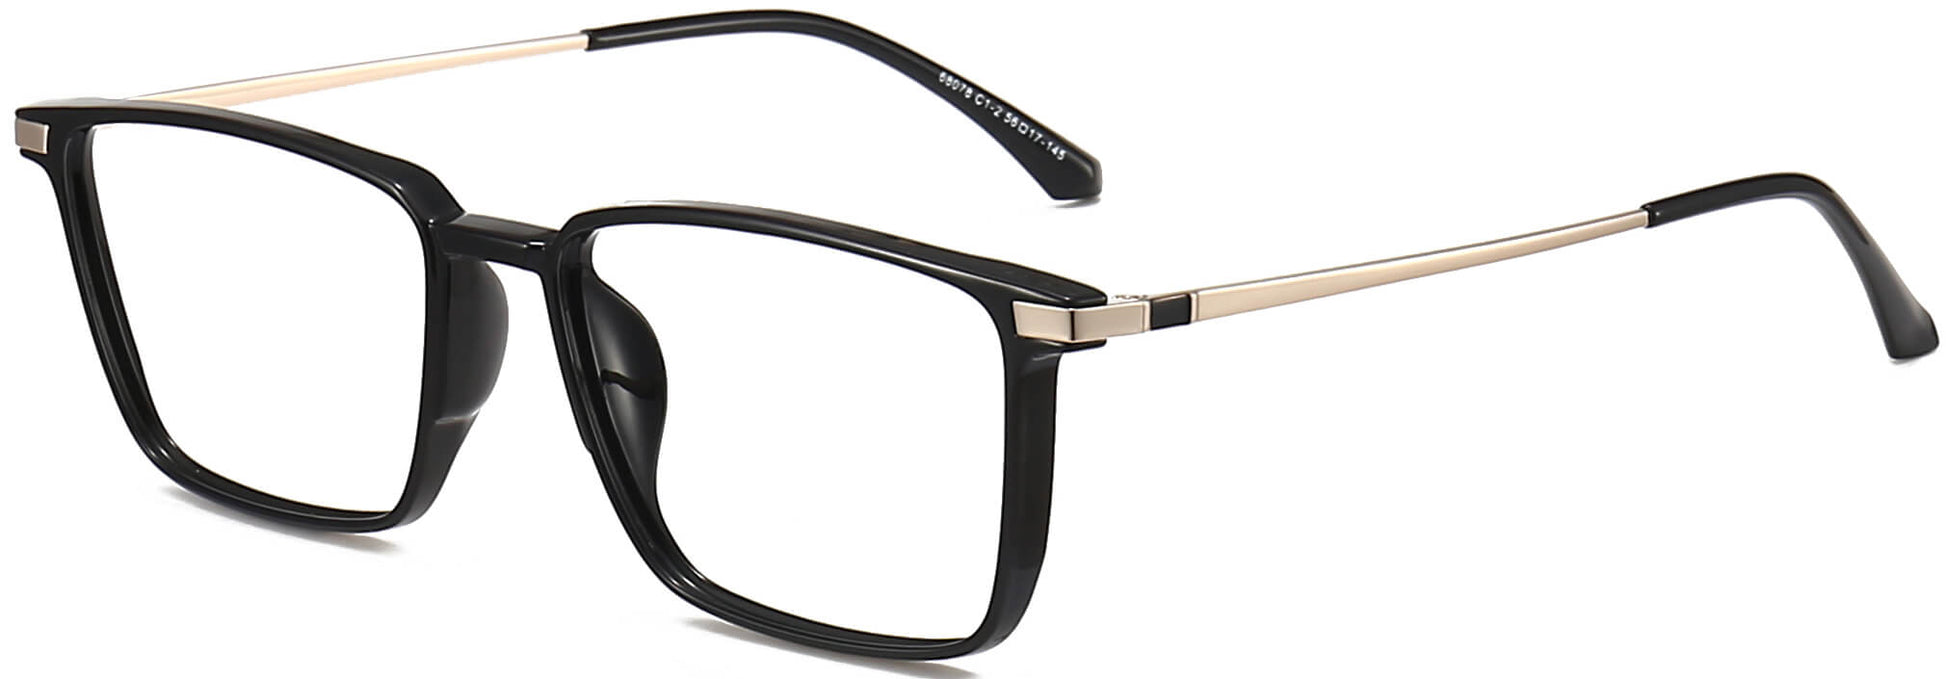 Trey Square Black Eyeglasses from ANRRI, angle view